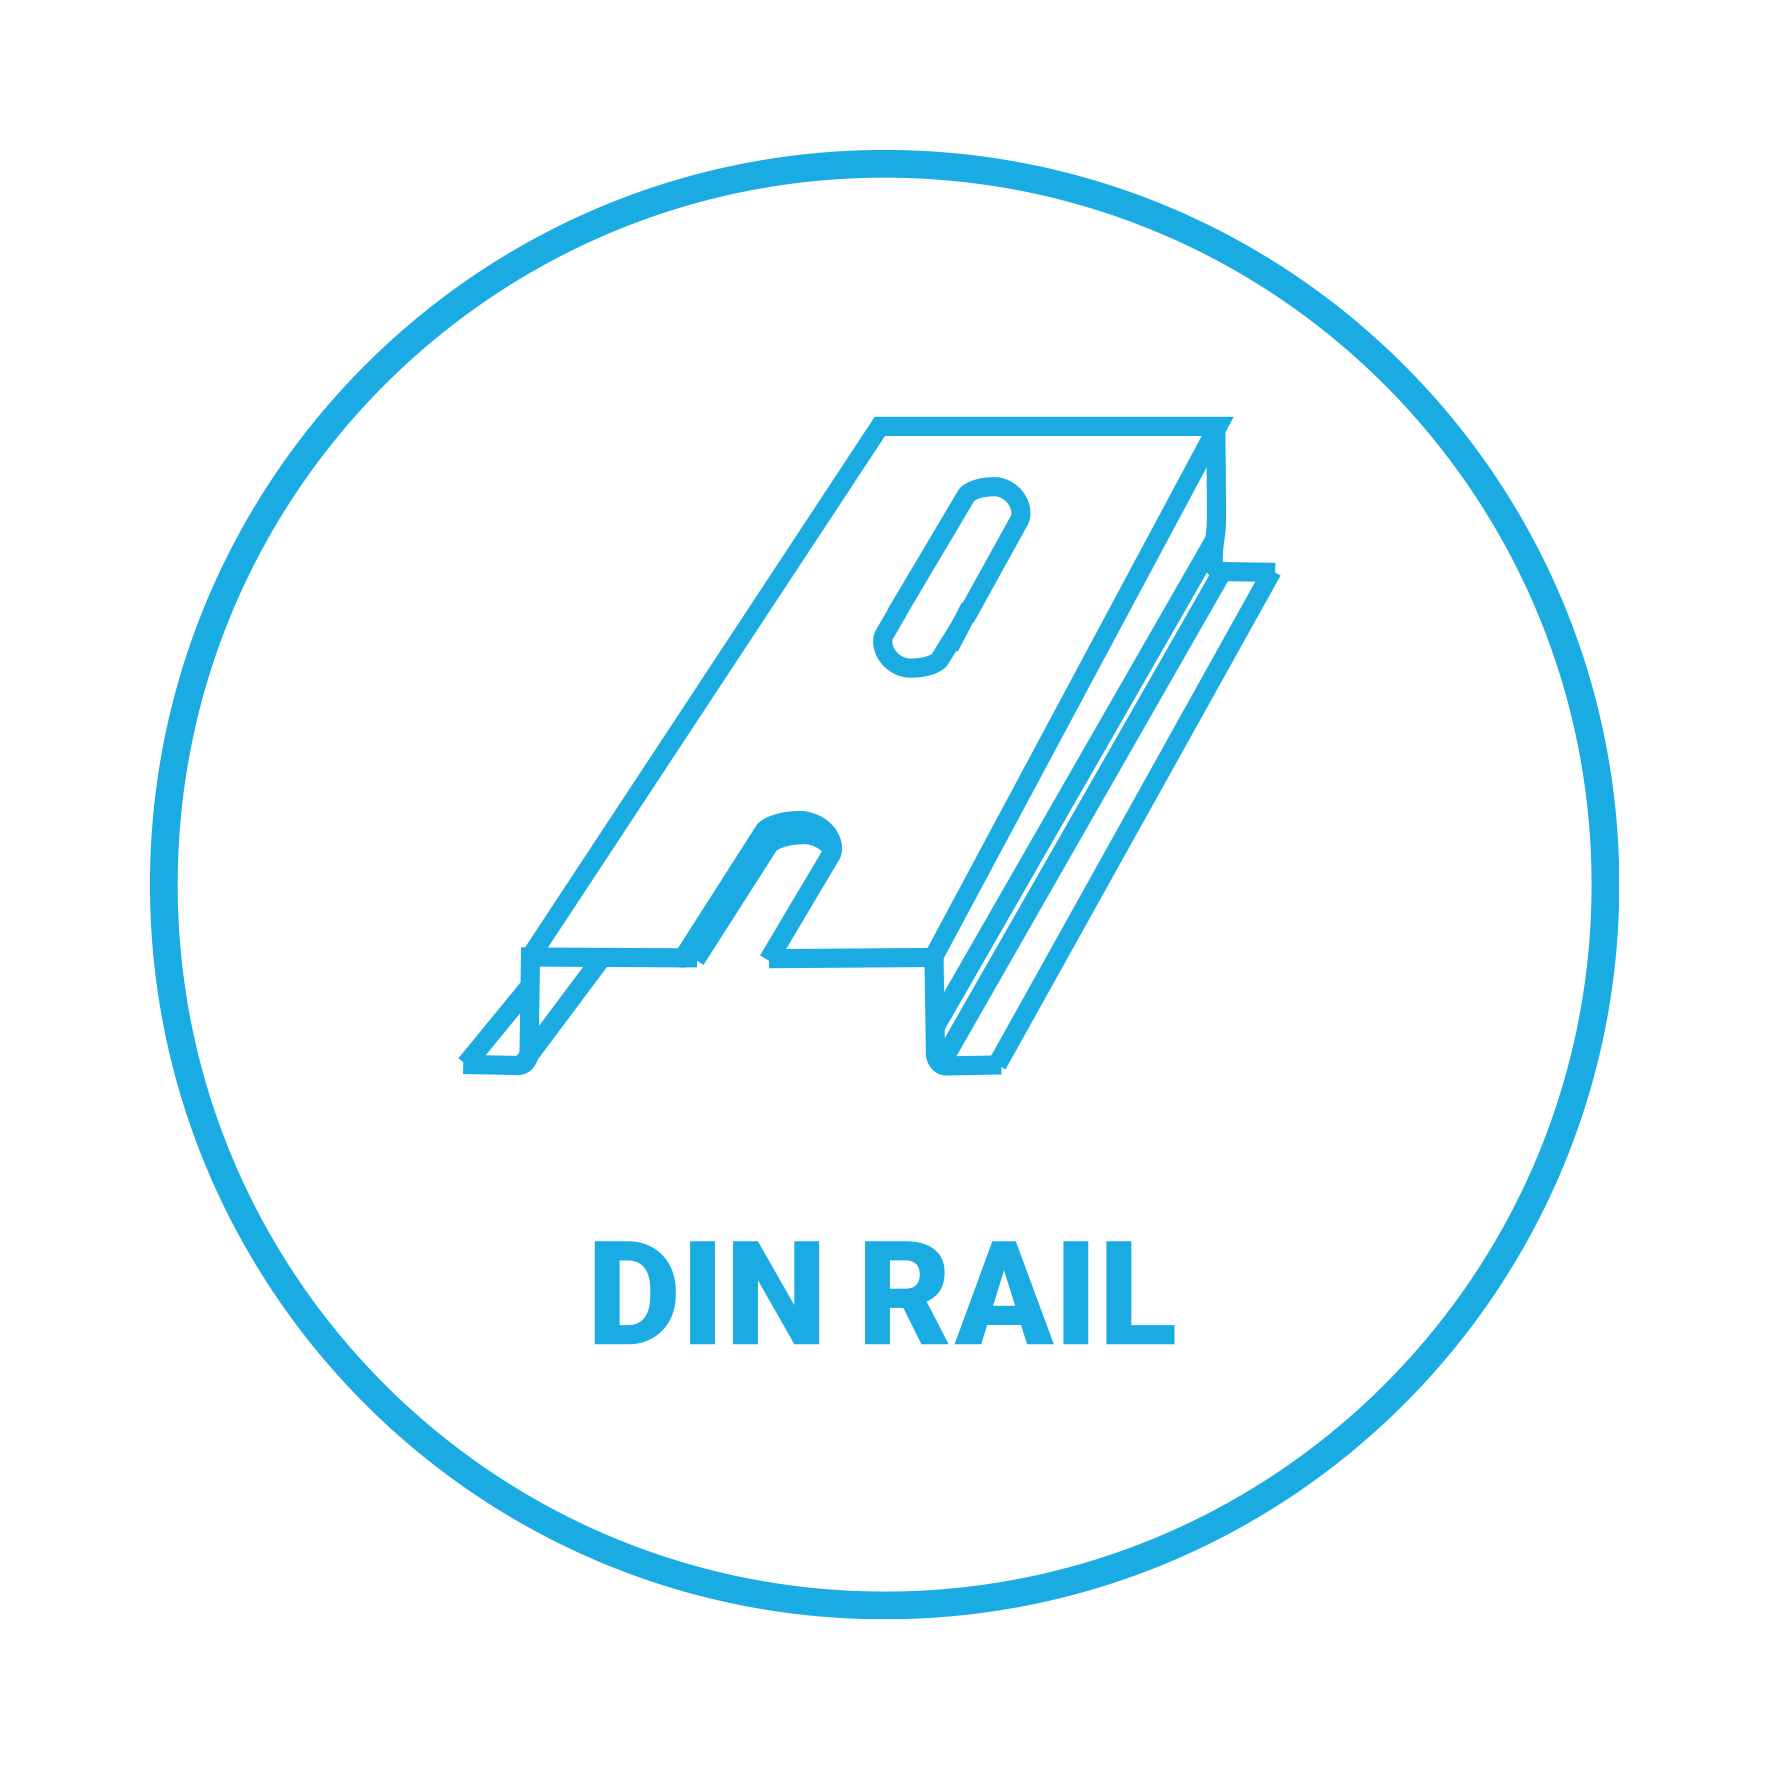 Din rail